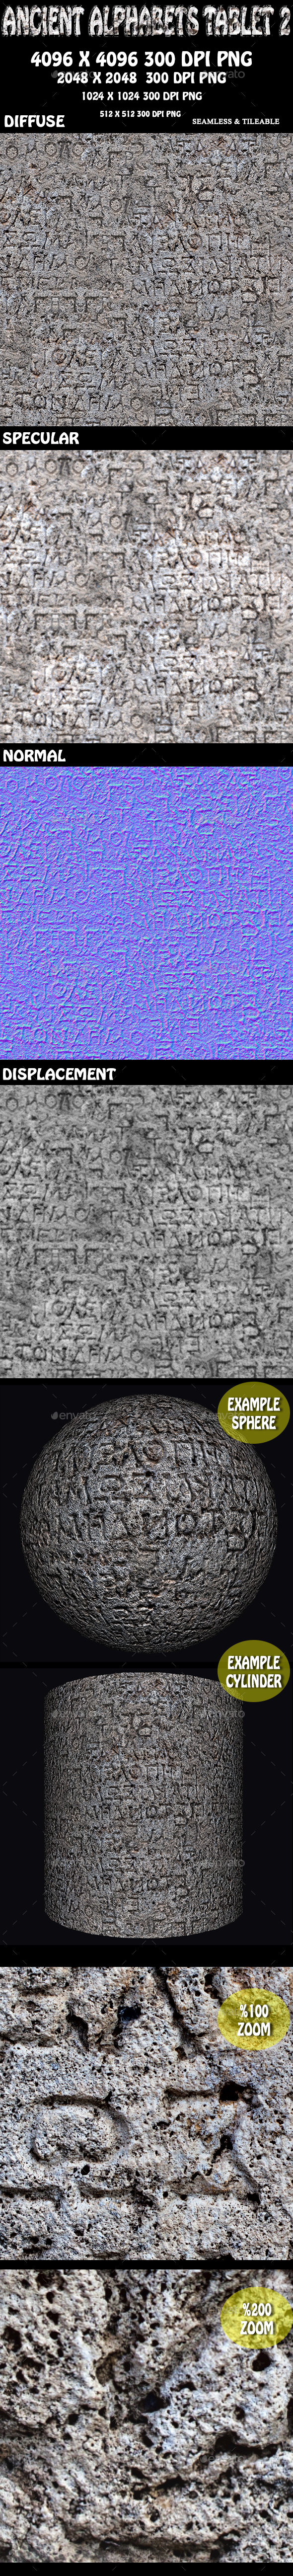 Ancient Alphabet Tablet - 3Docean 16929108